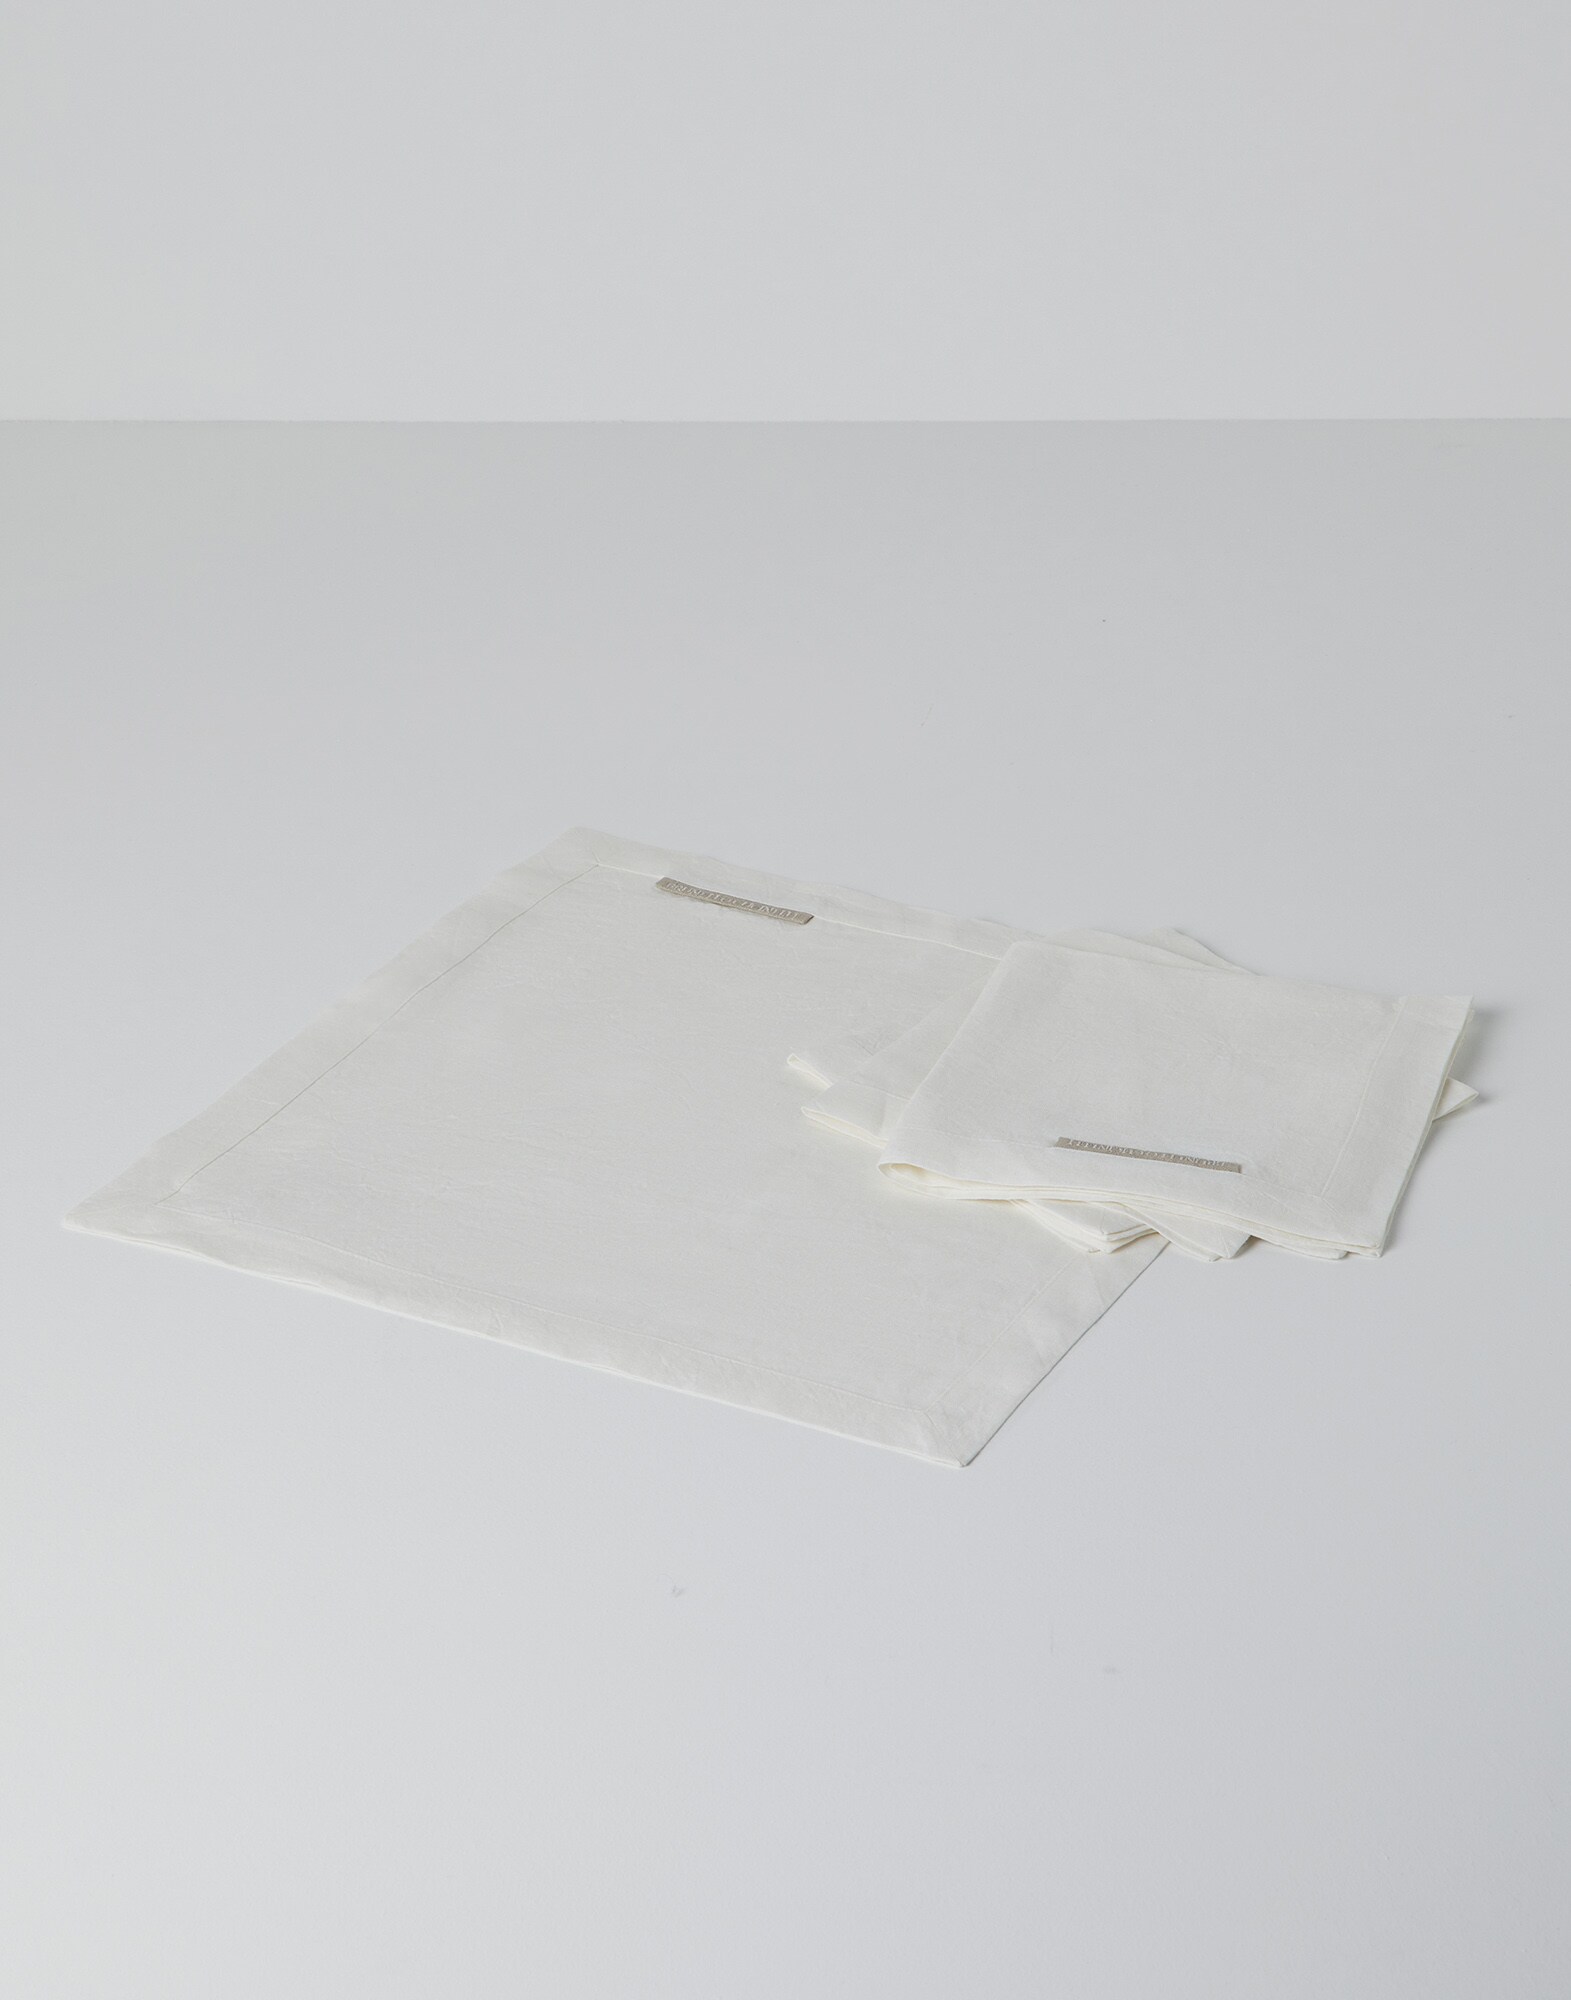 4-piece napkin set